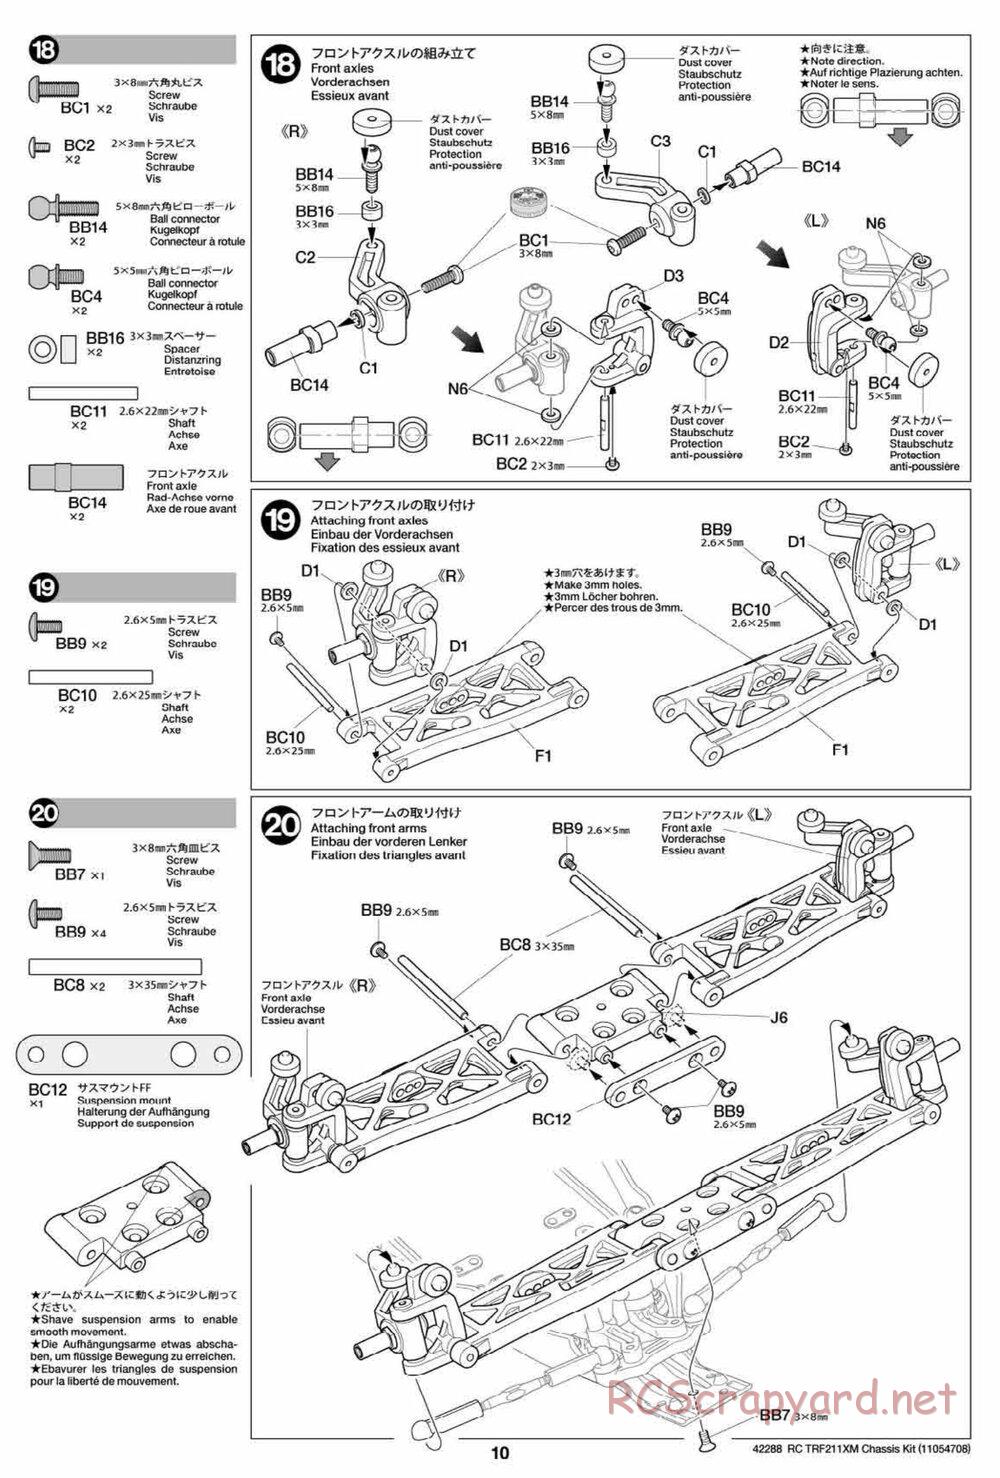 Tamiya - TRF211XM Chassis - Manual - Page 10